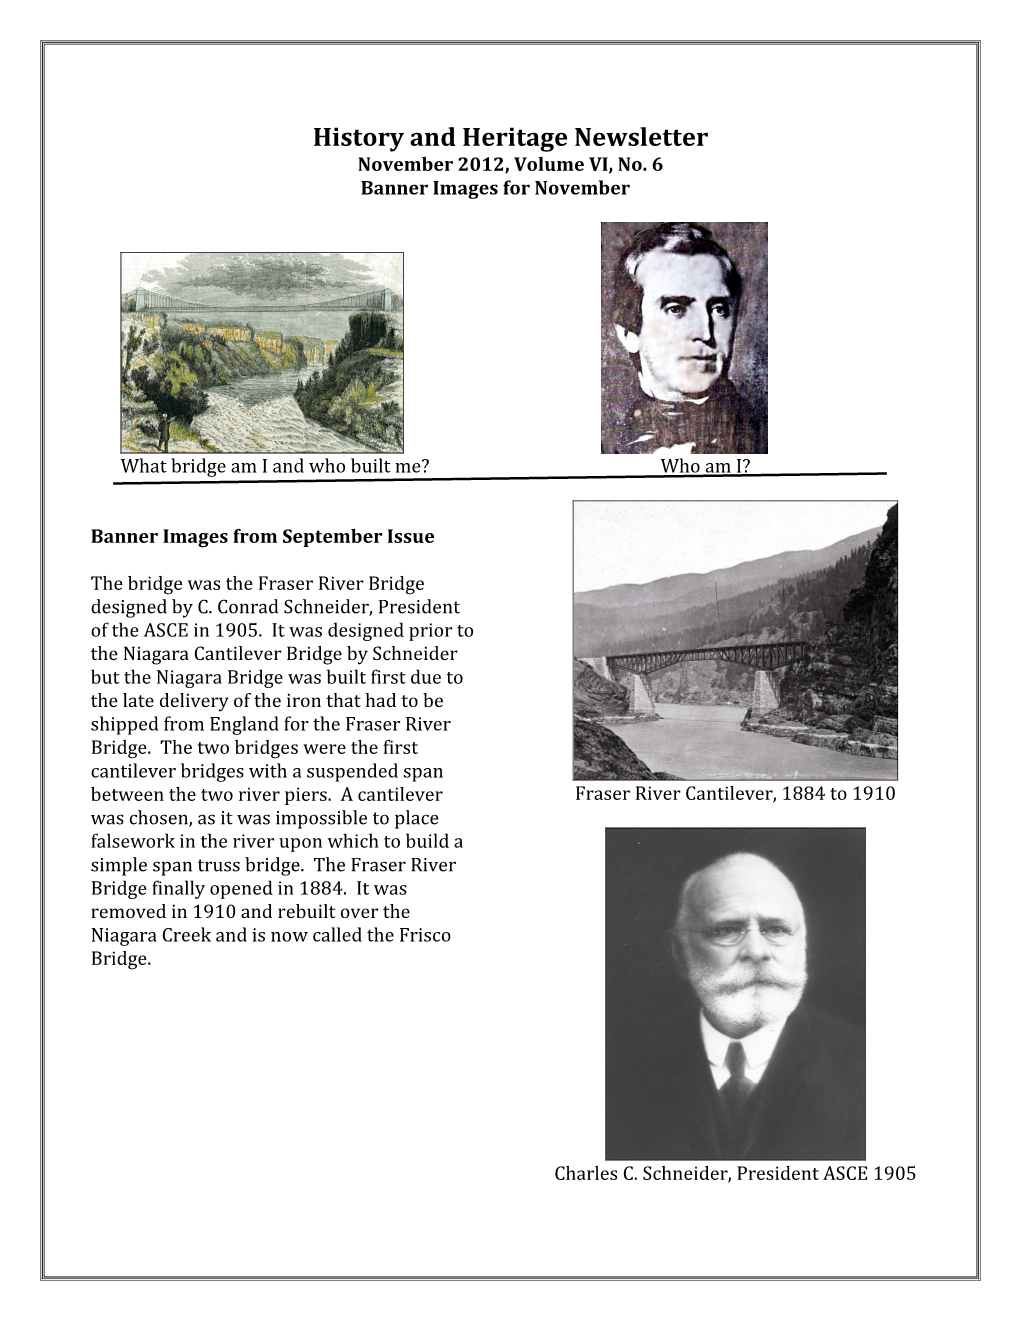 History and Heritage Newsletter November 2012, Volume VI, No